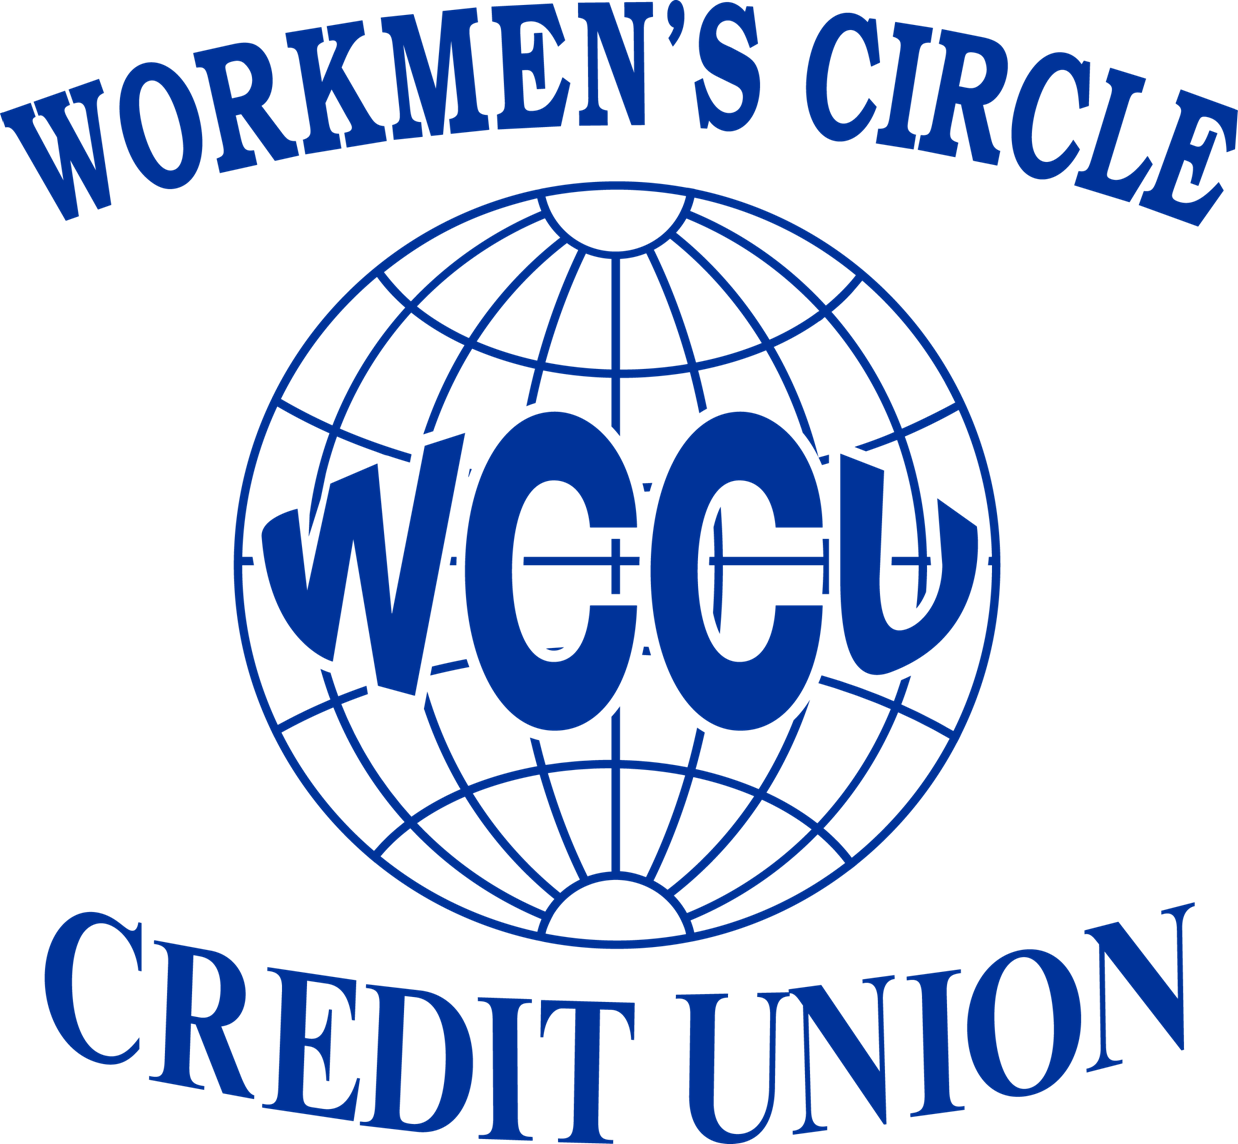 Workmens Circle Credit Union logo